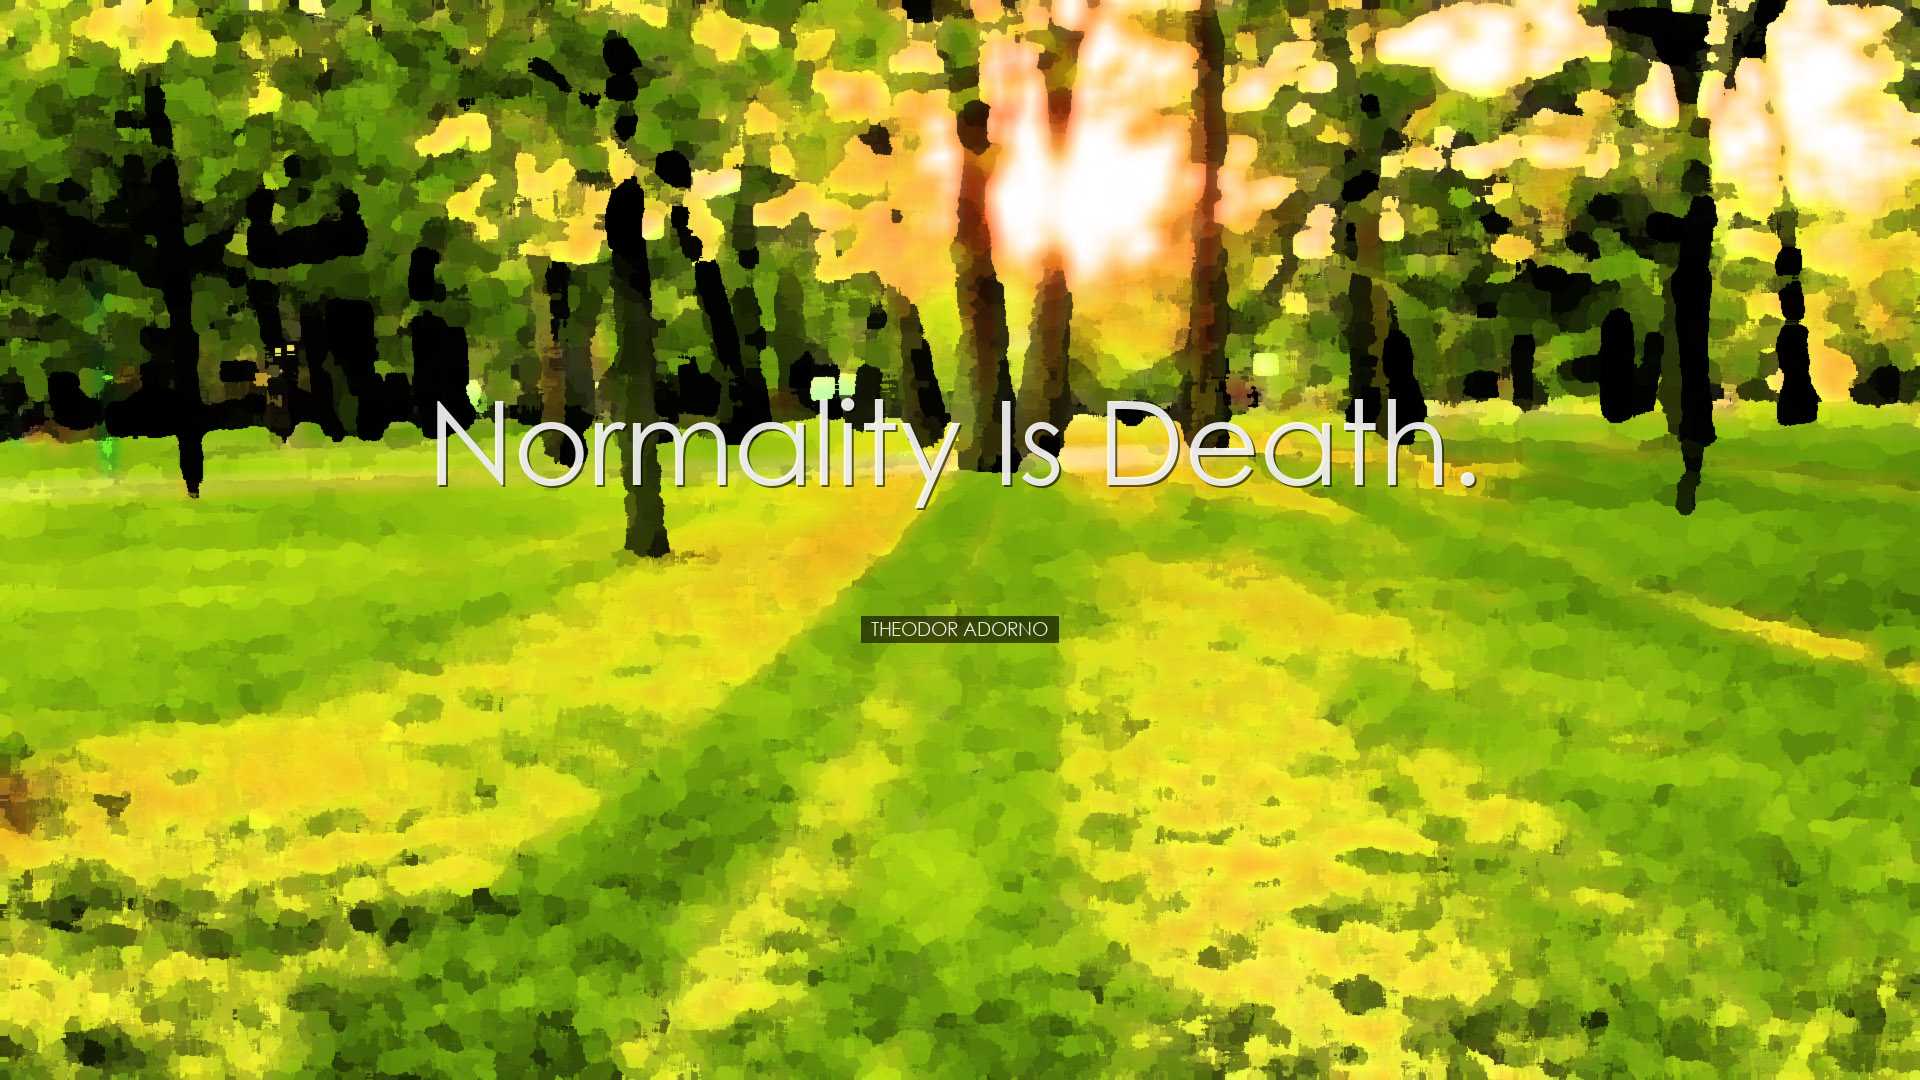 Normality is death. - Theodor Adorno